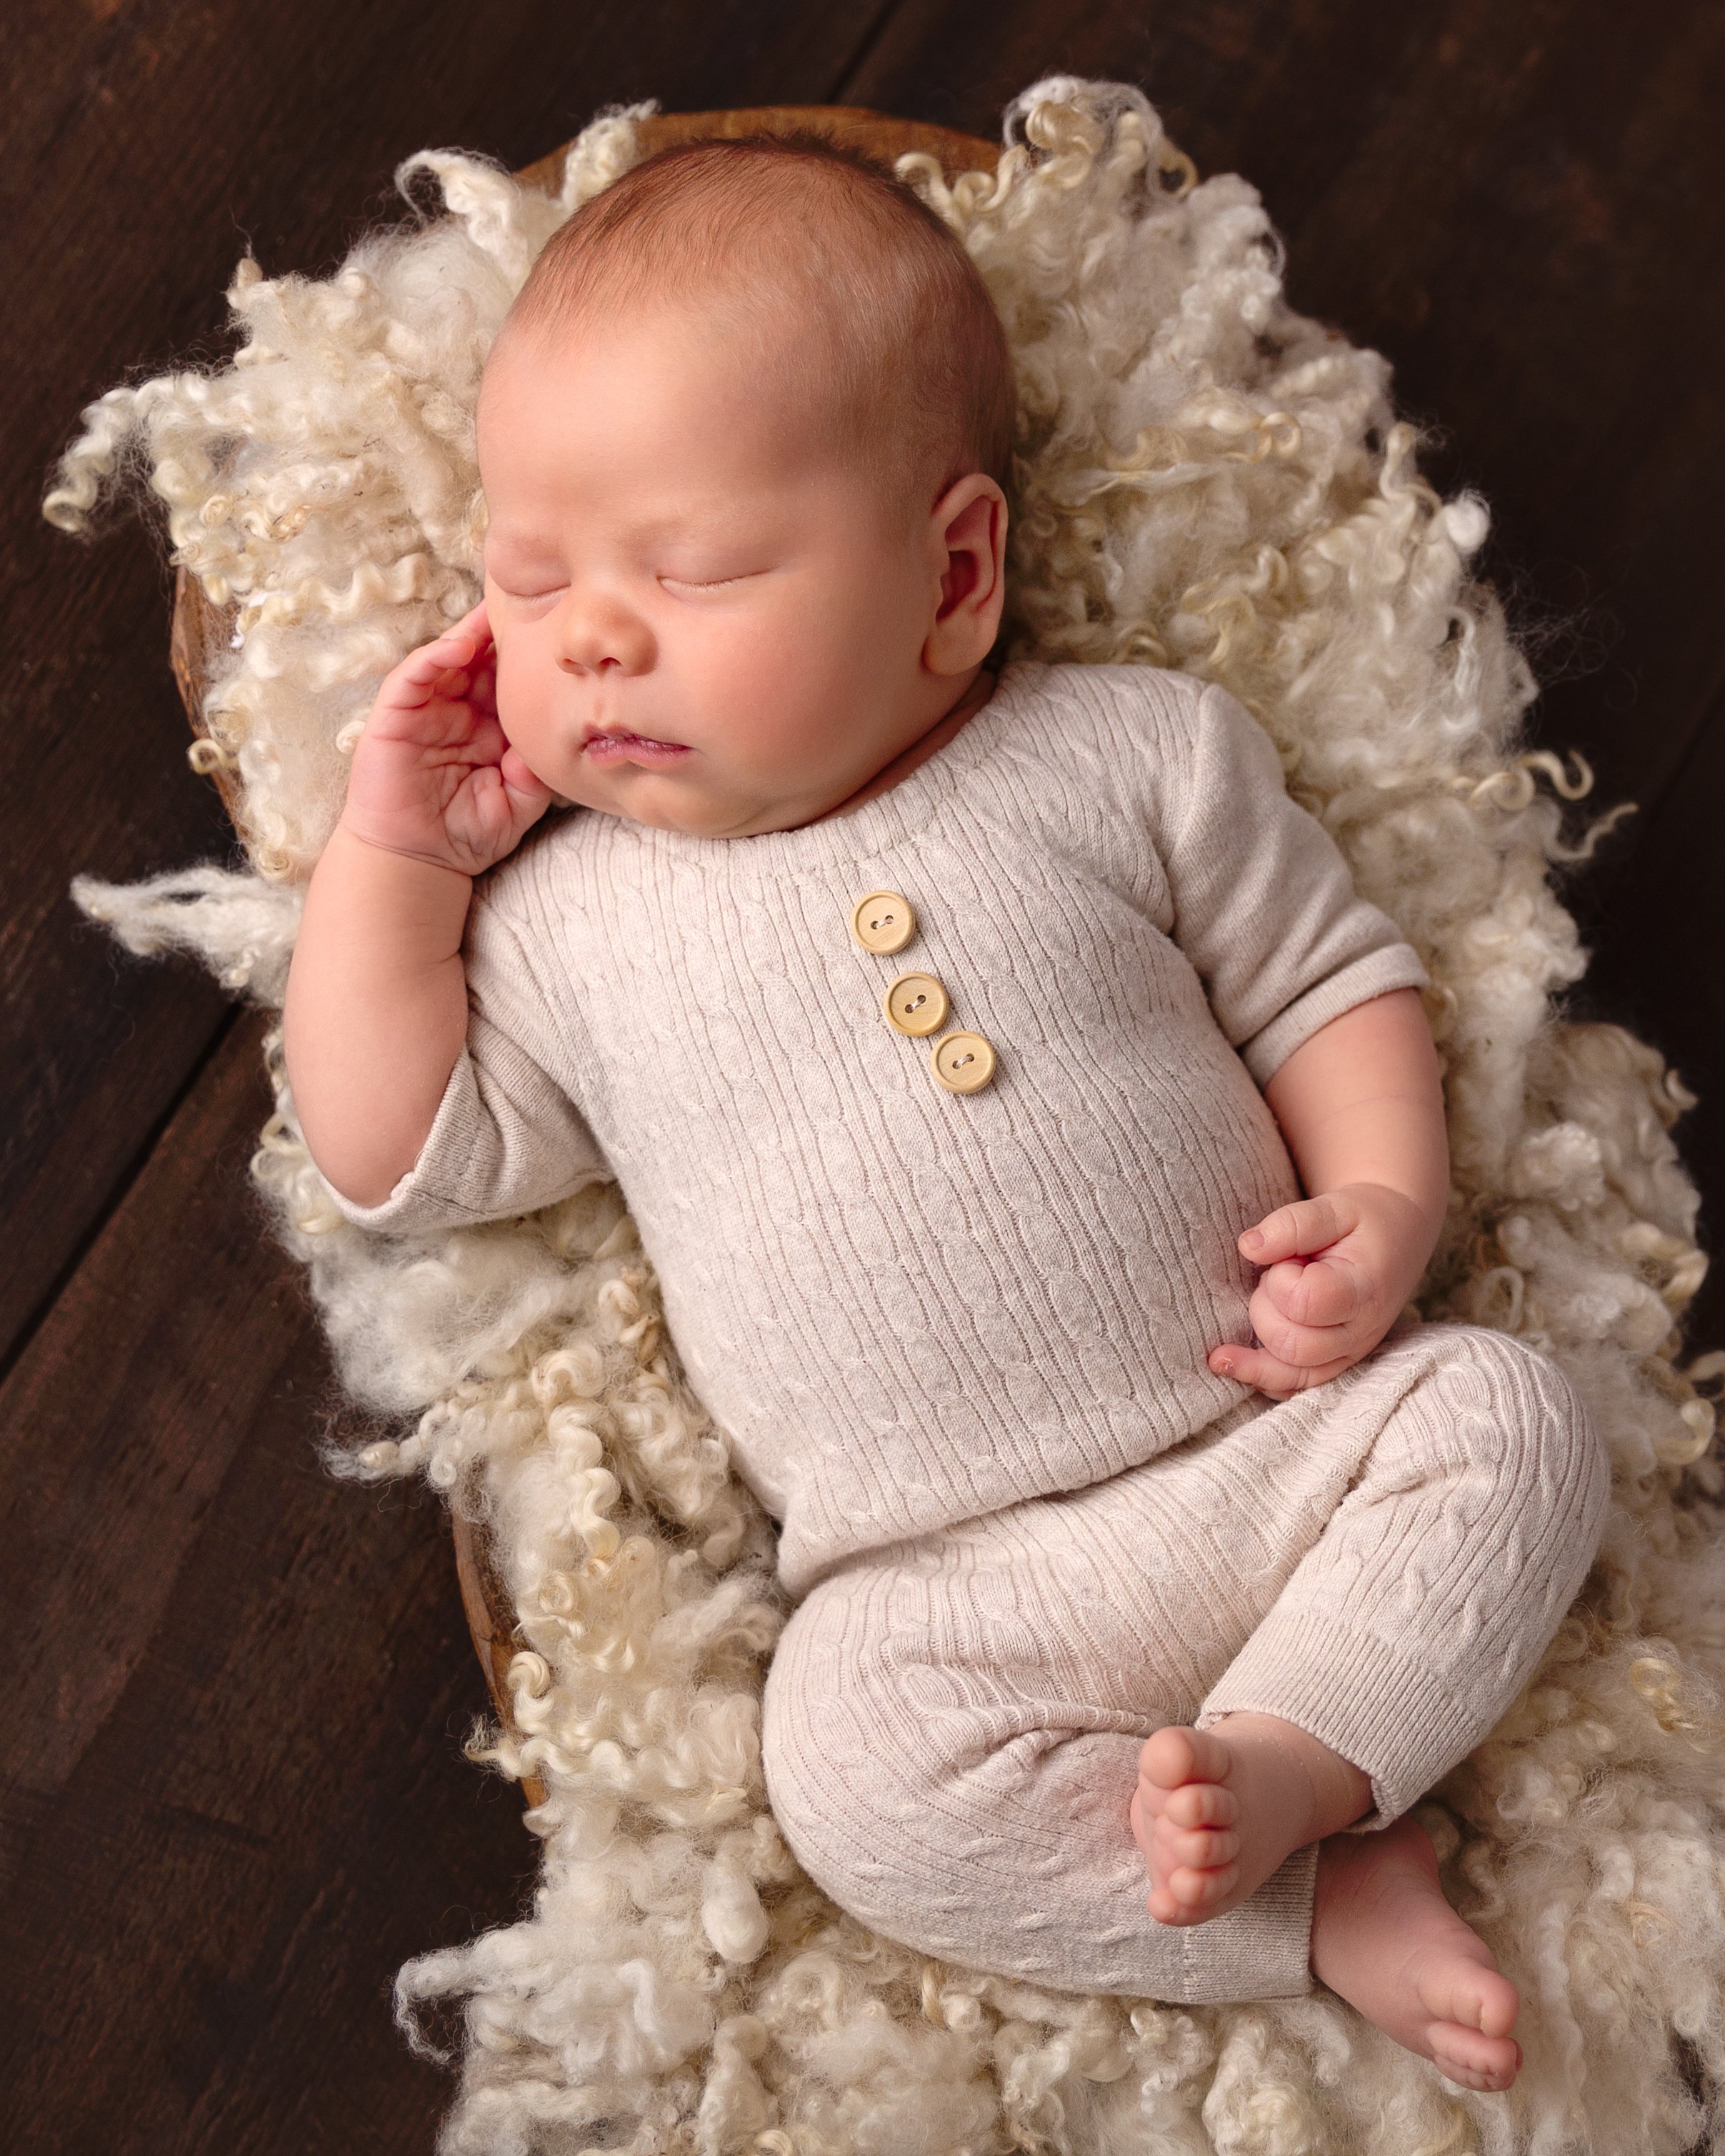 newborn wearing beige romper in a brown basket